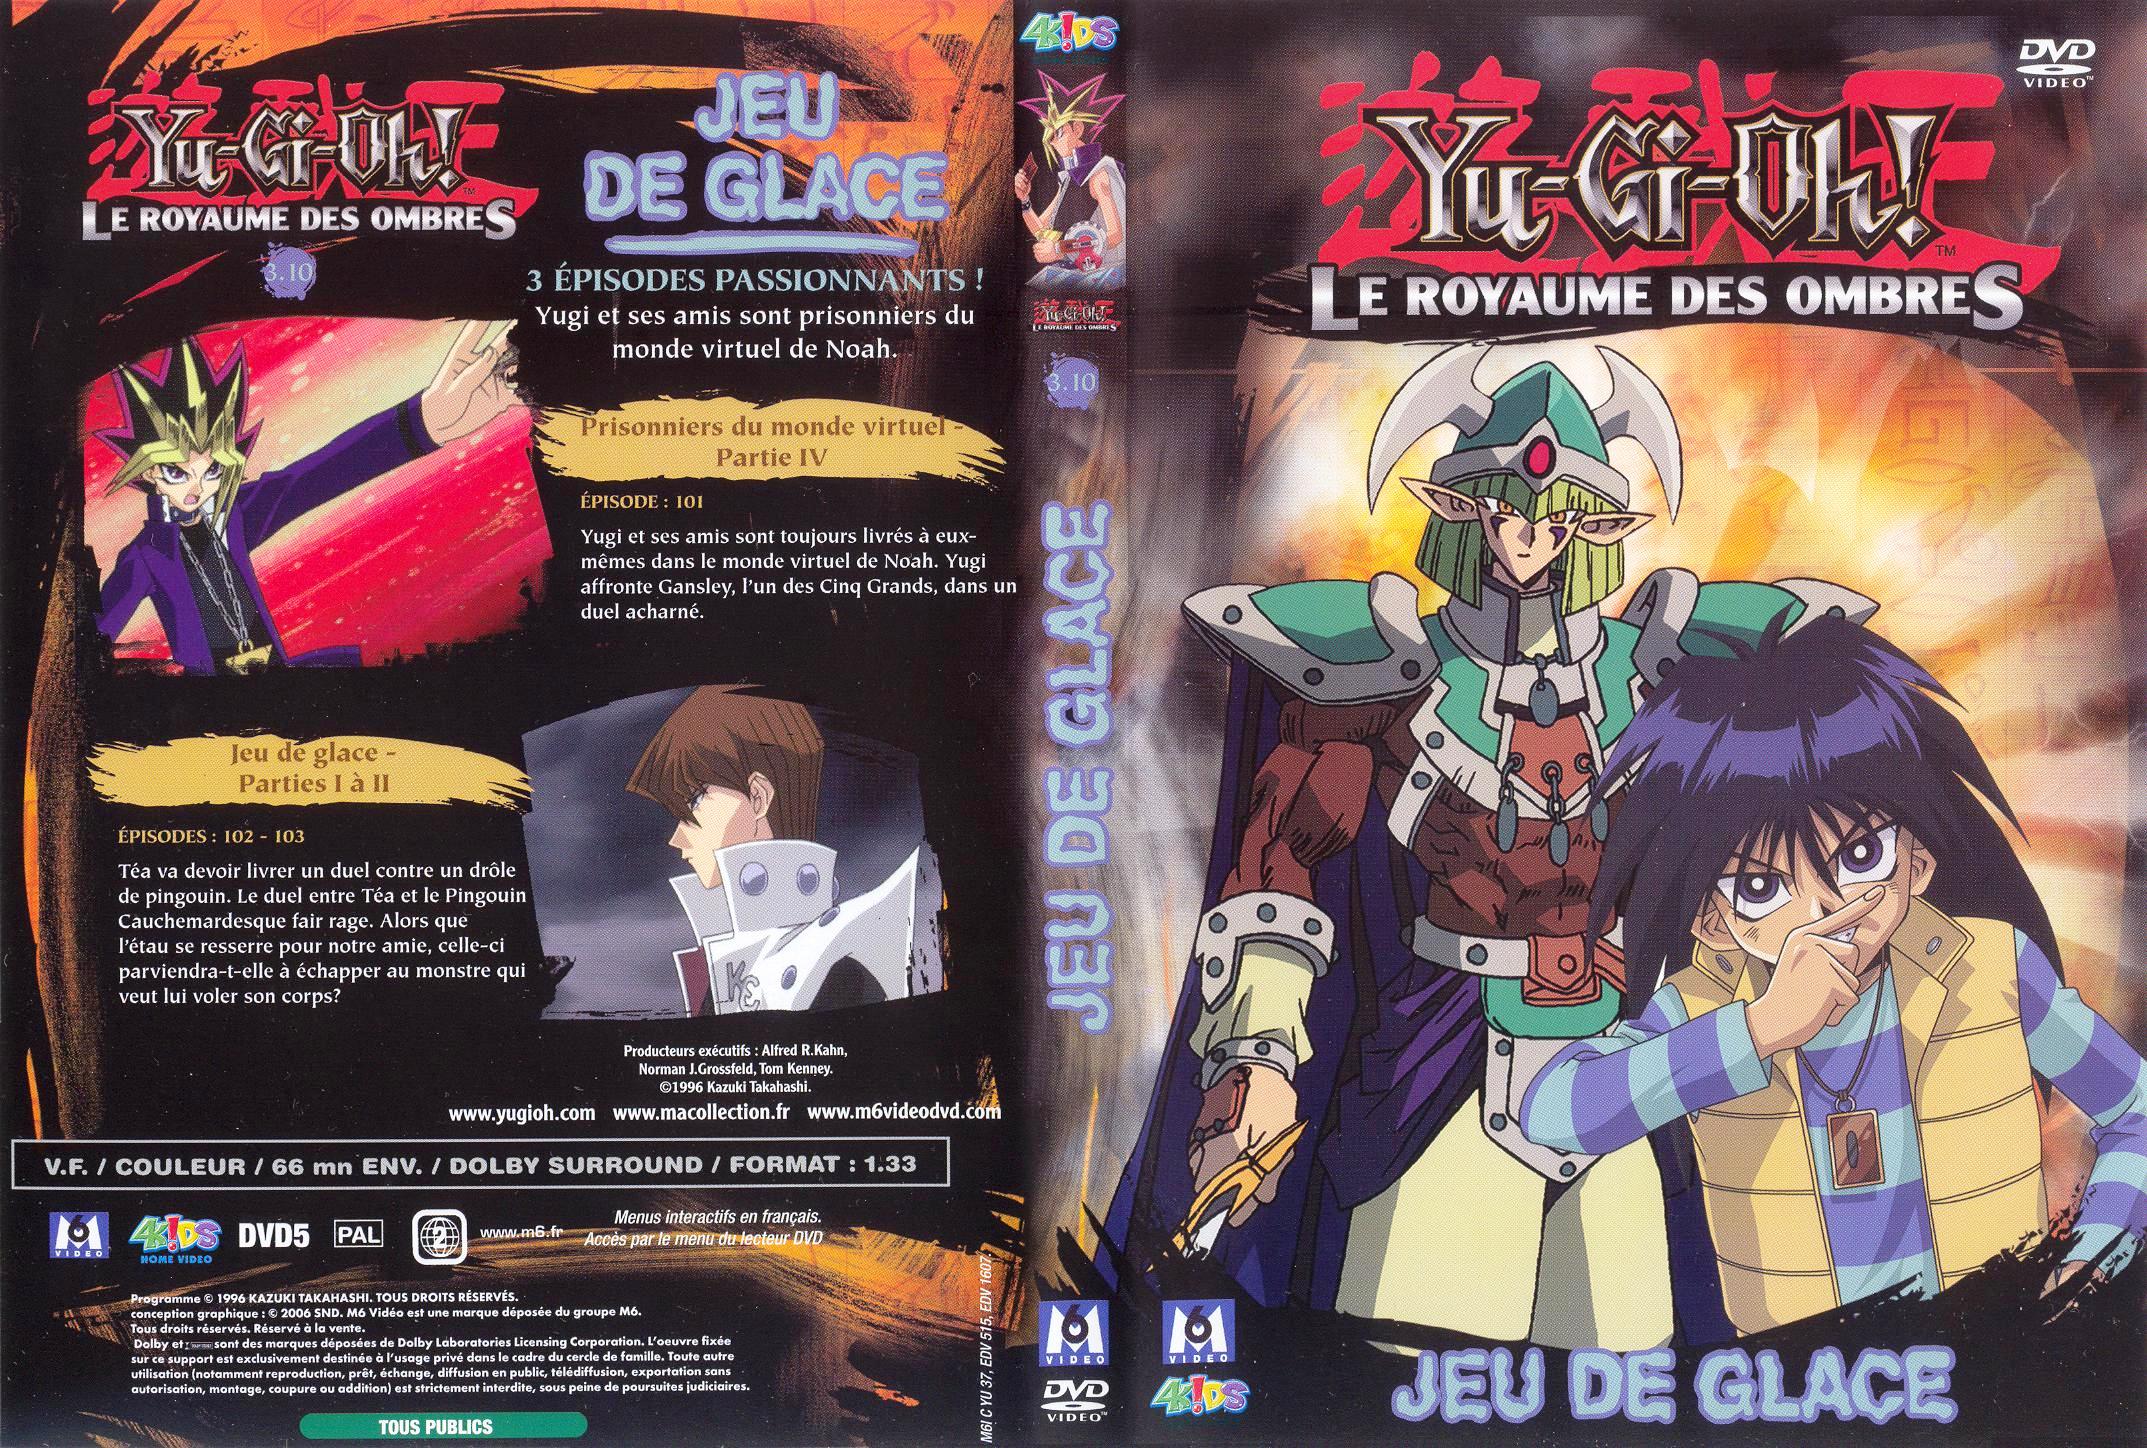 Jaquette DVD Yu-gi-oh! saison 3 vol 10